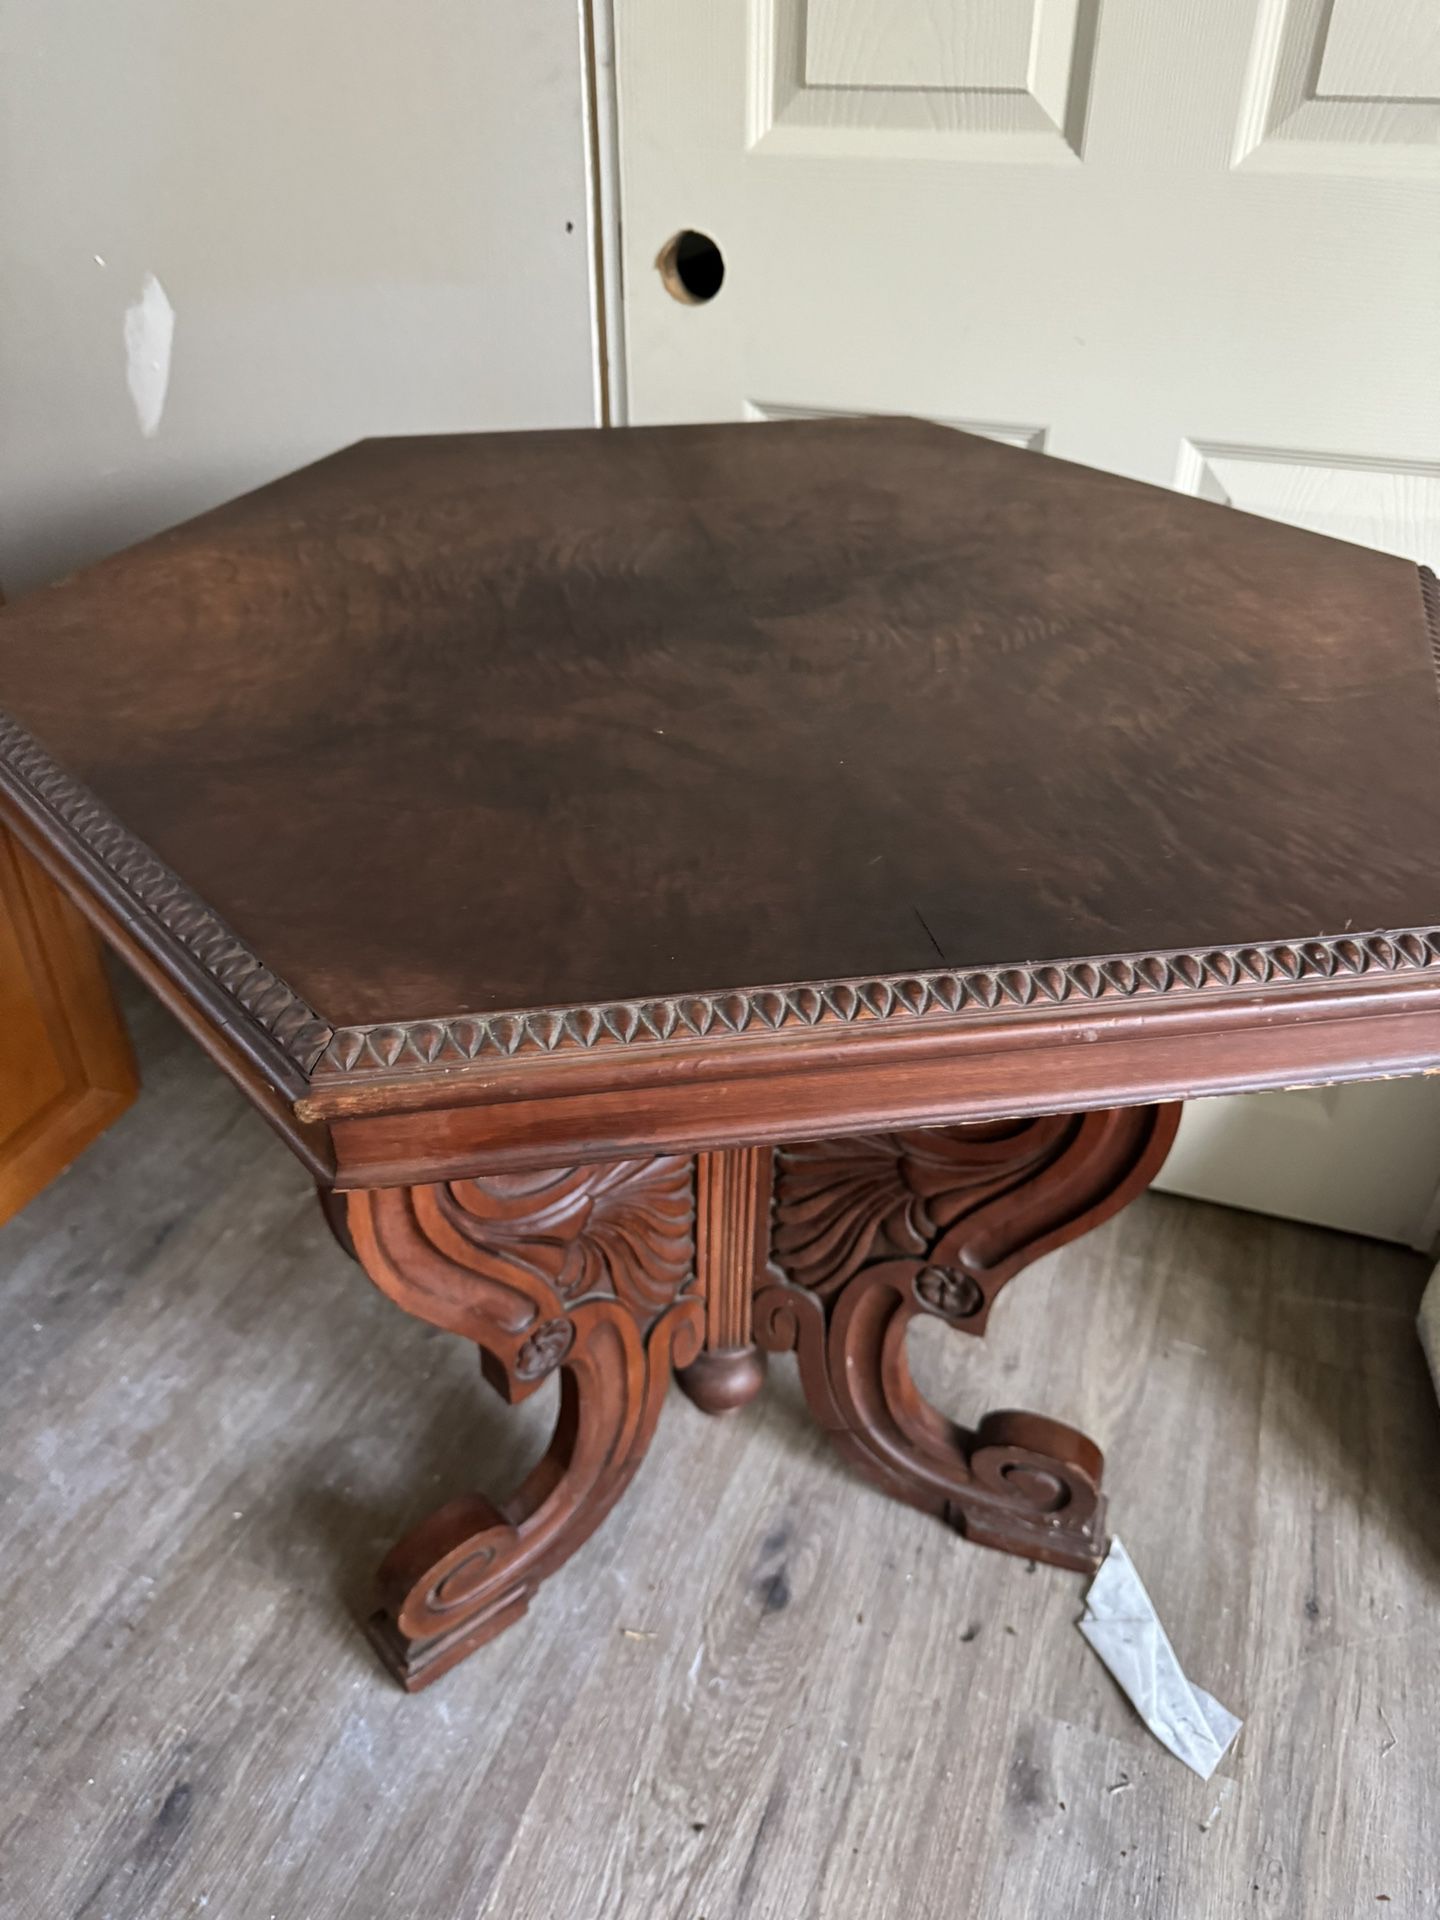 Antique Table 30x30x30